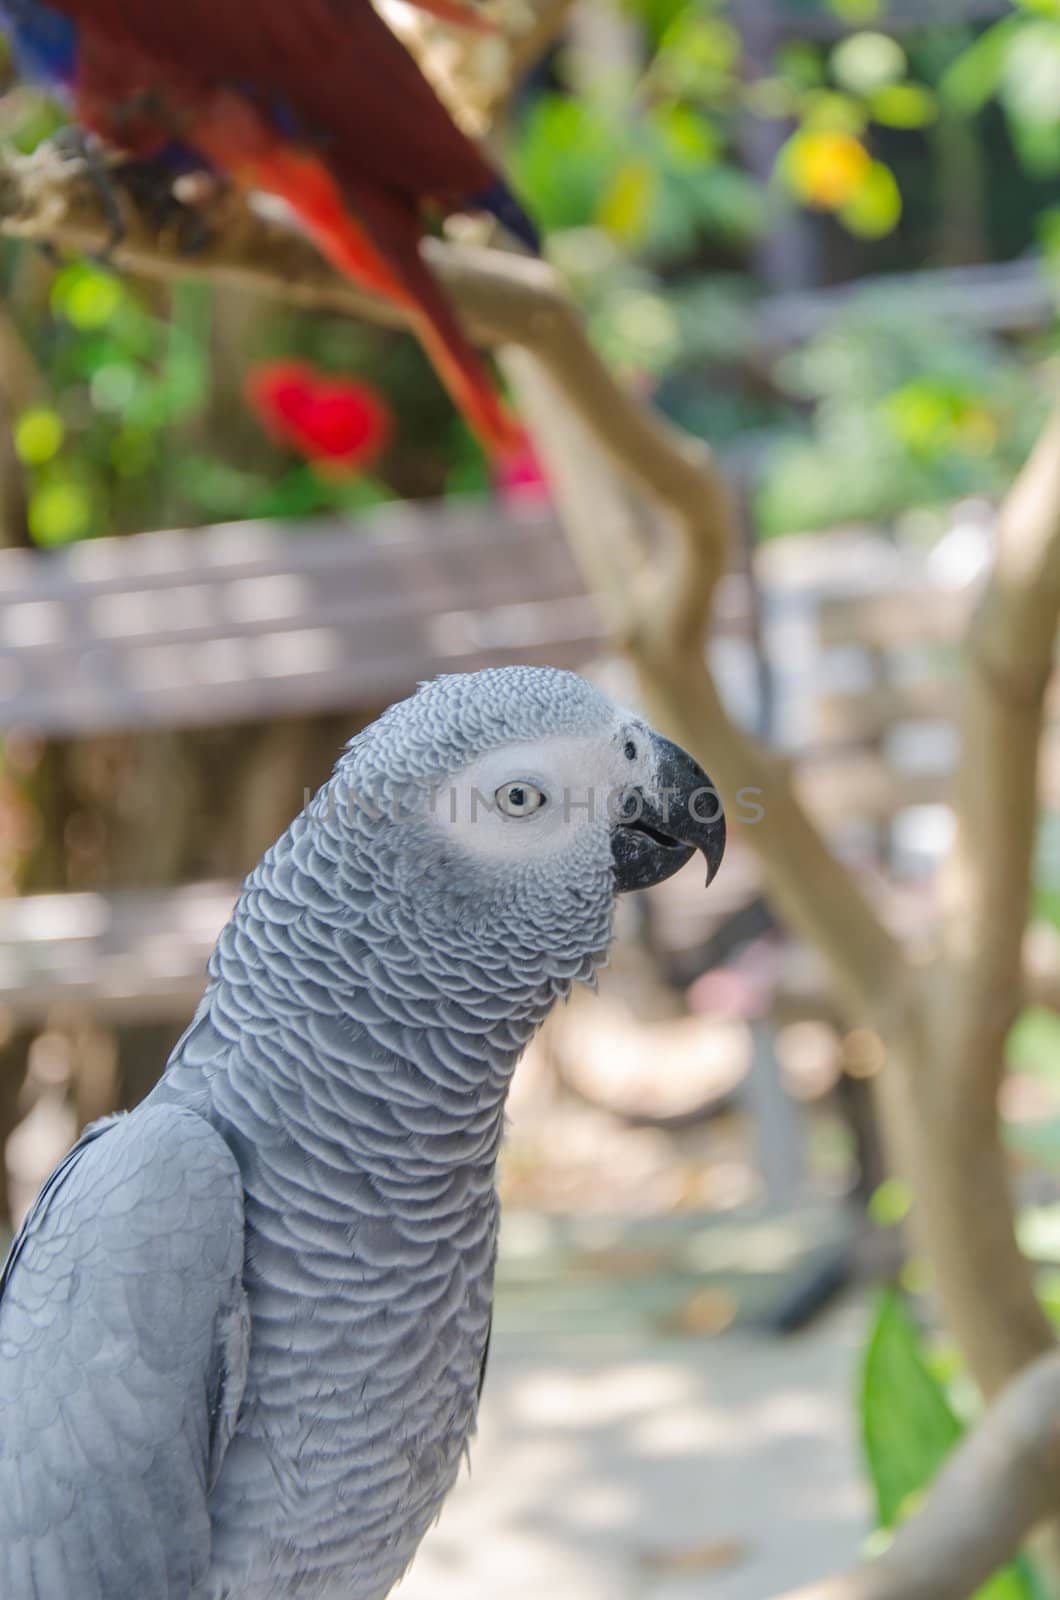 Close up shoot of a parrot